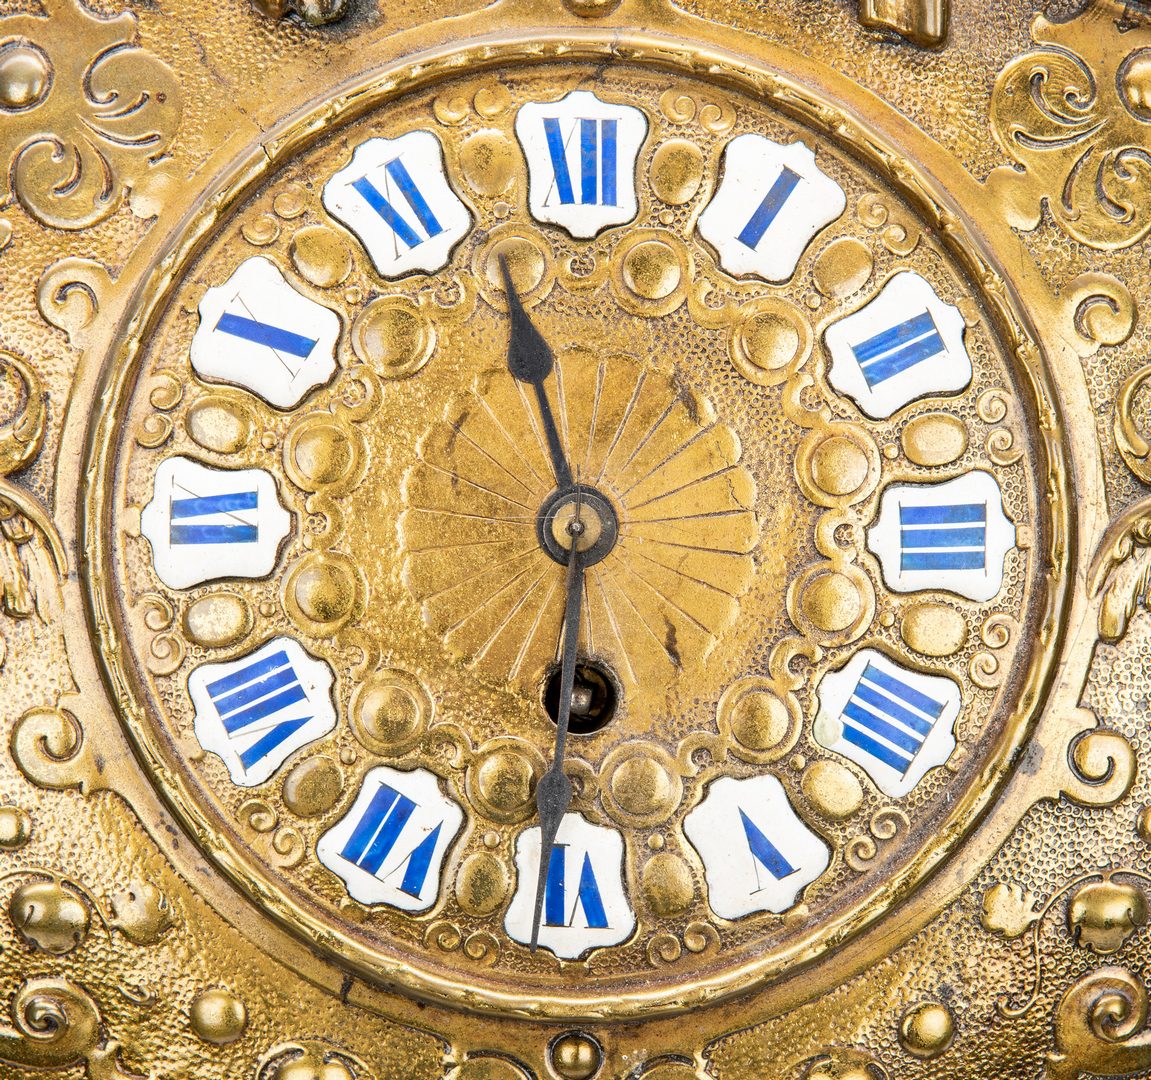 Lot 154: Gustav Becker German Ormolu Wall Clock